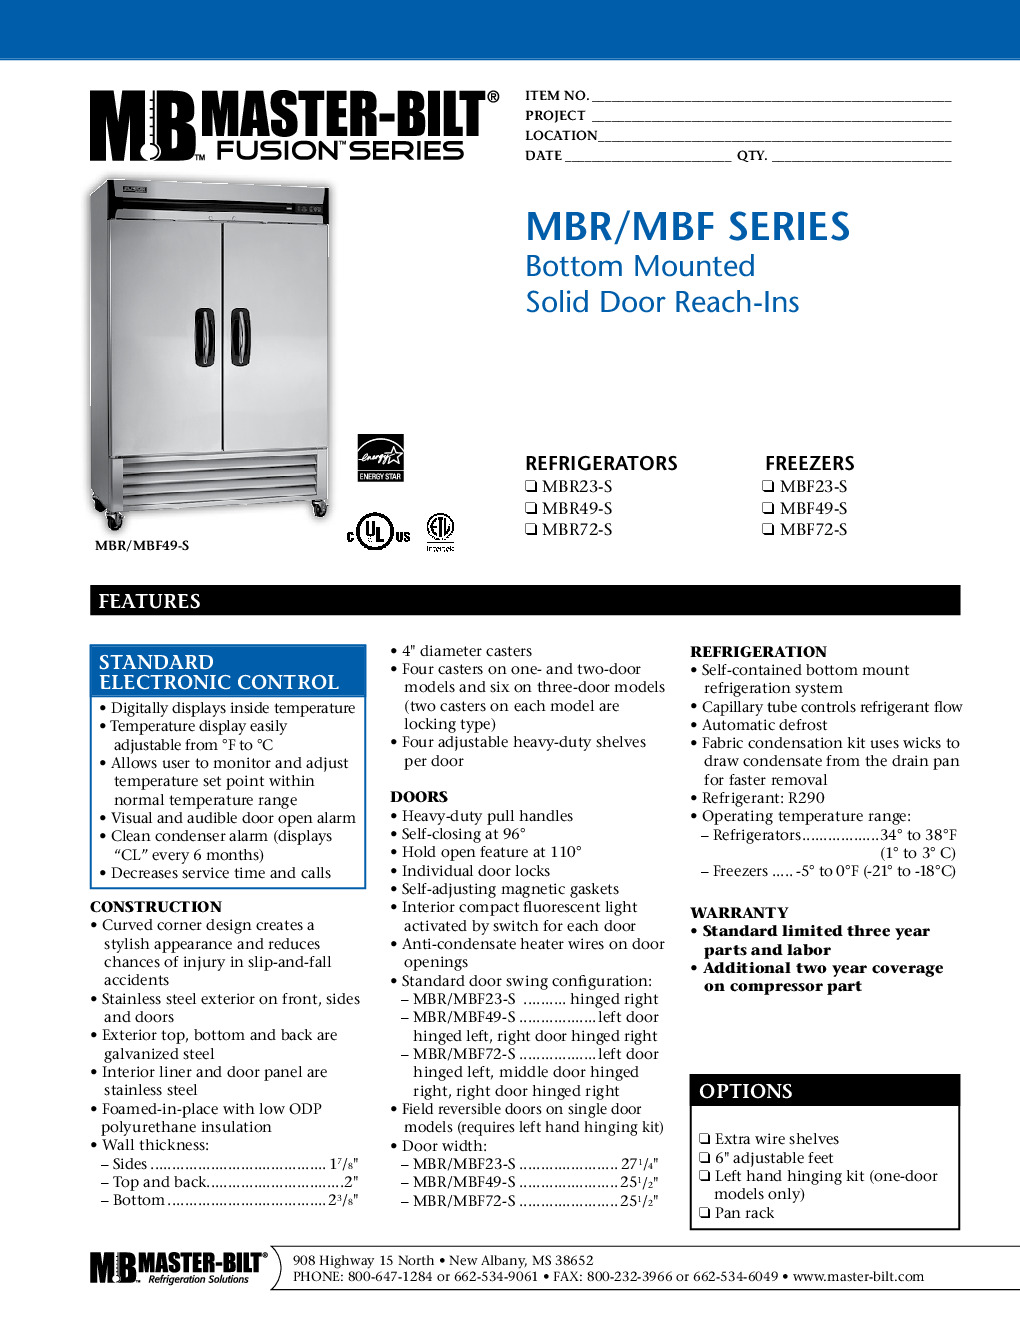 Master-Bilt MBR72-S Reach-In Refrigerator